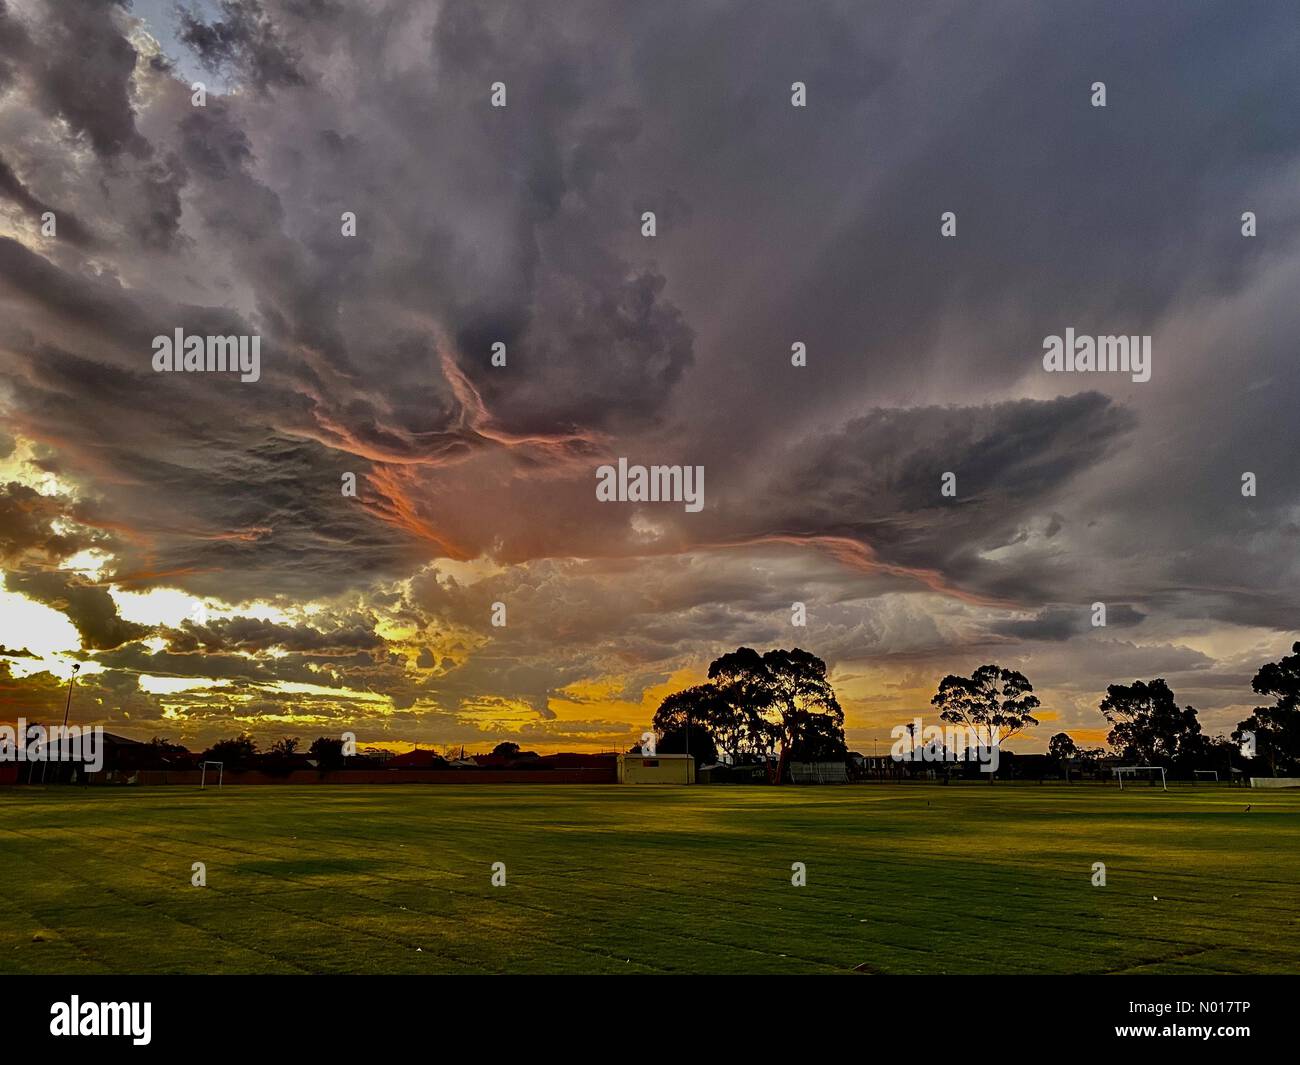 Dramatischer Himmel bei Sonnenuntergang, Adelaide, Australien Kredit: amer ghazzal/StockimoNews/Alamy Live News Stockfoto